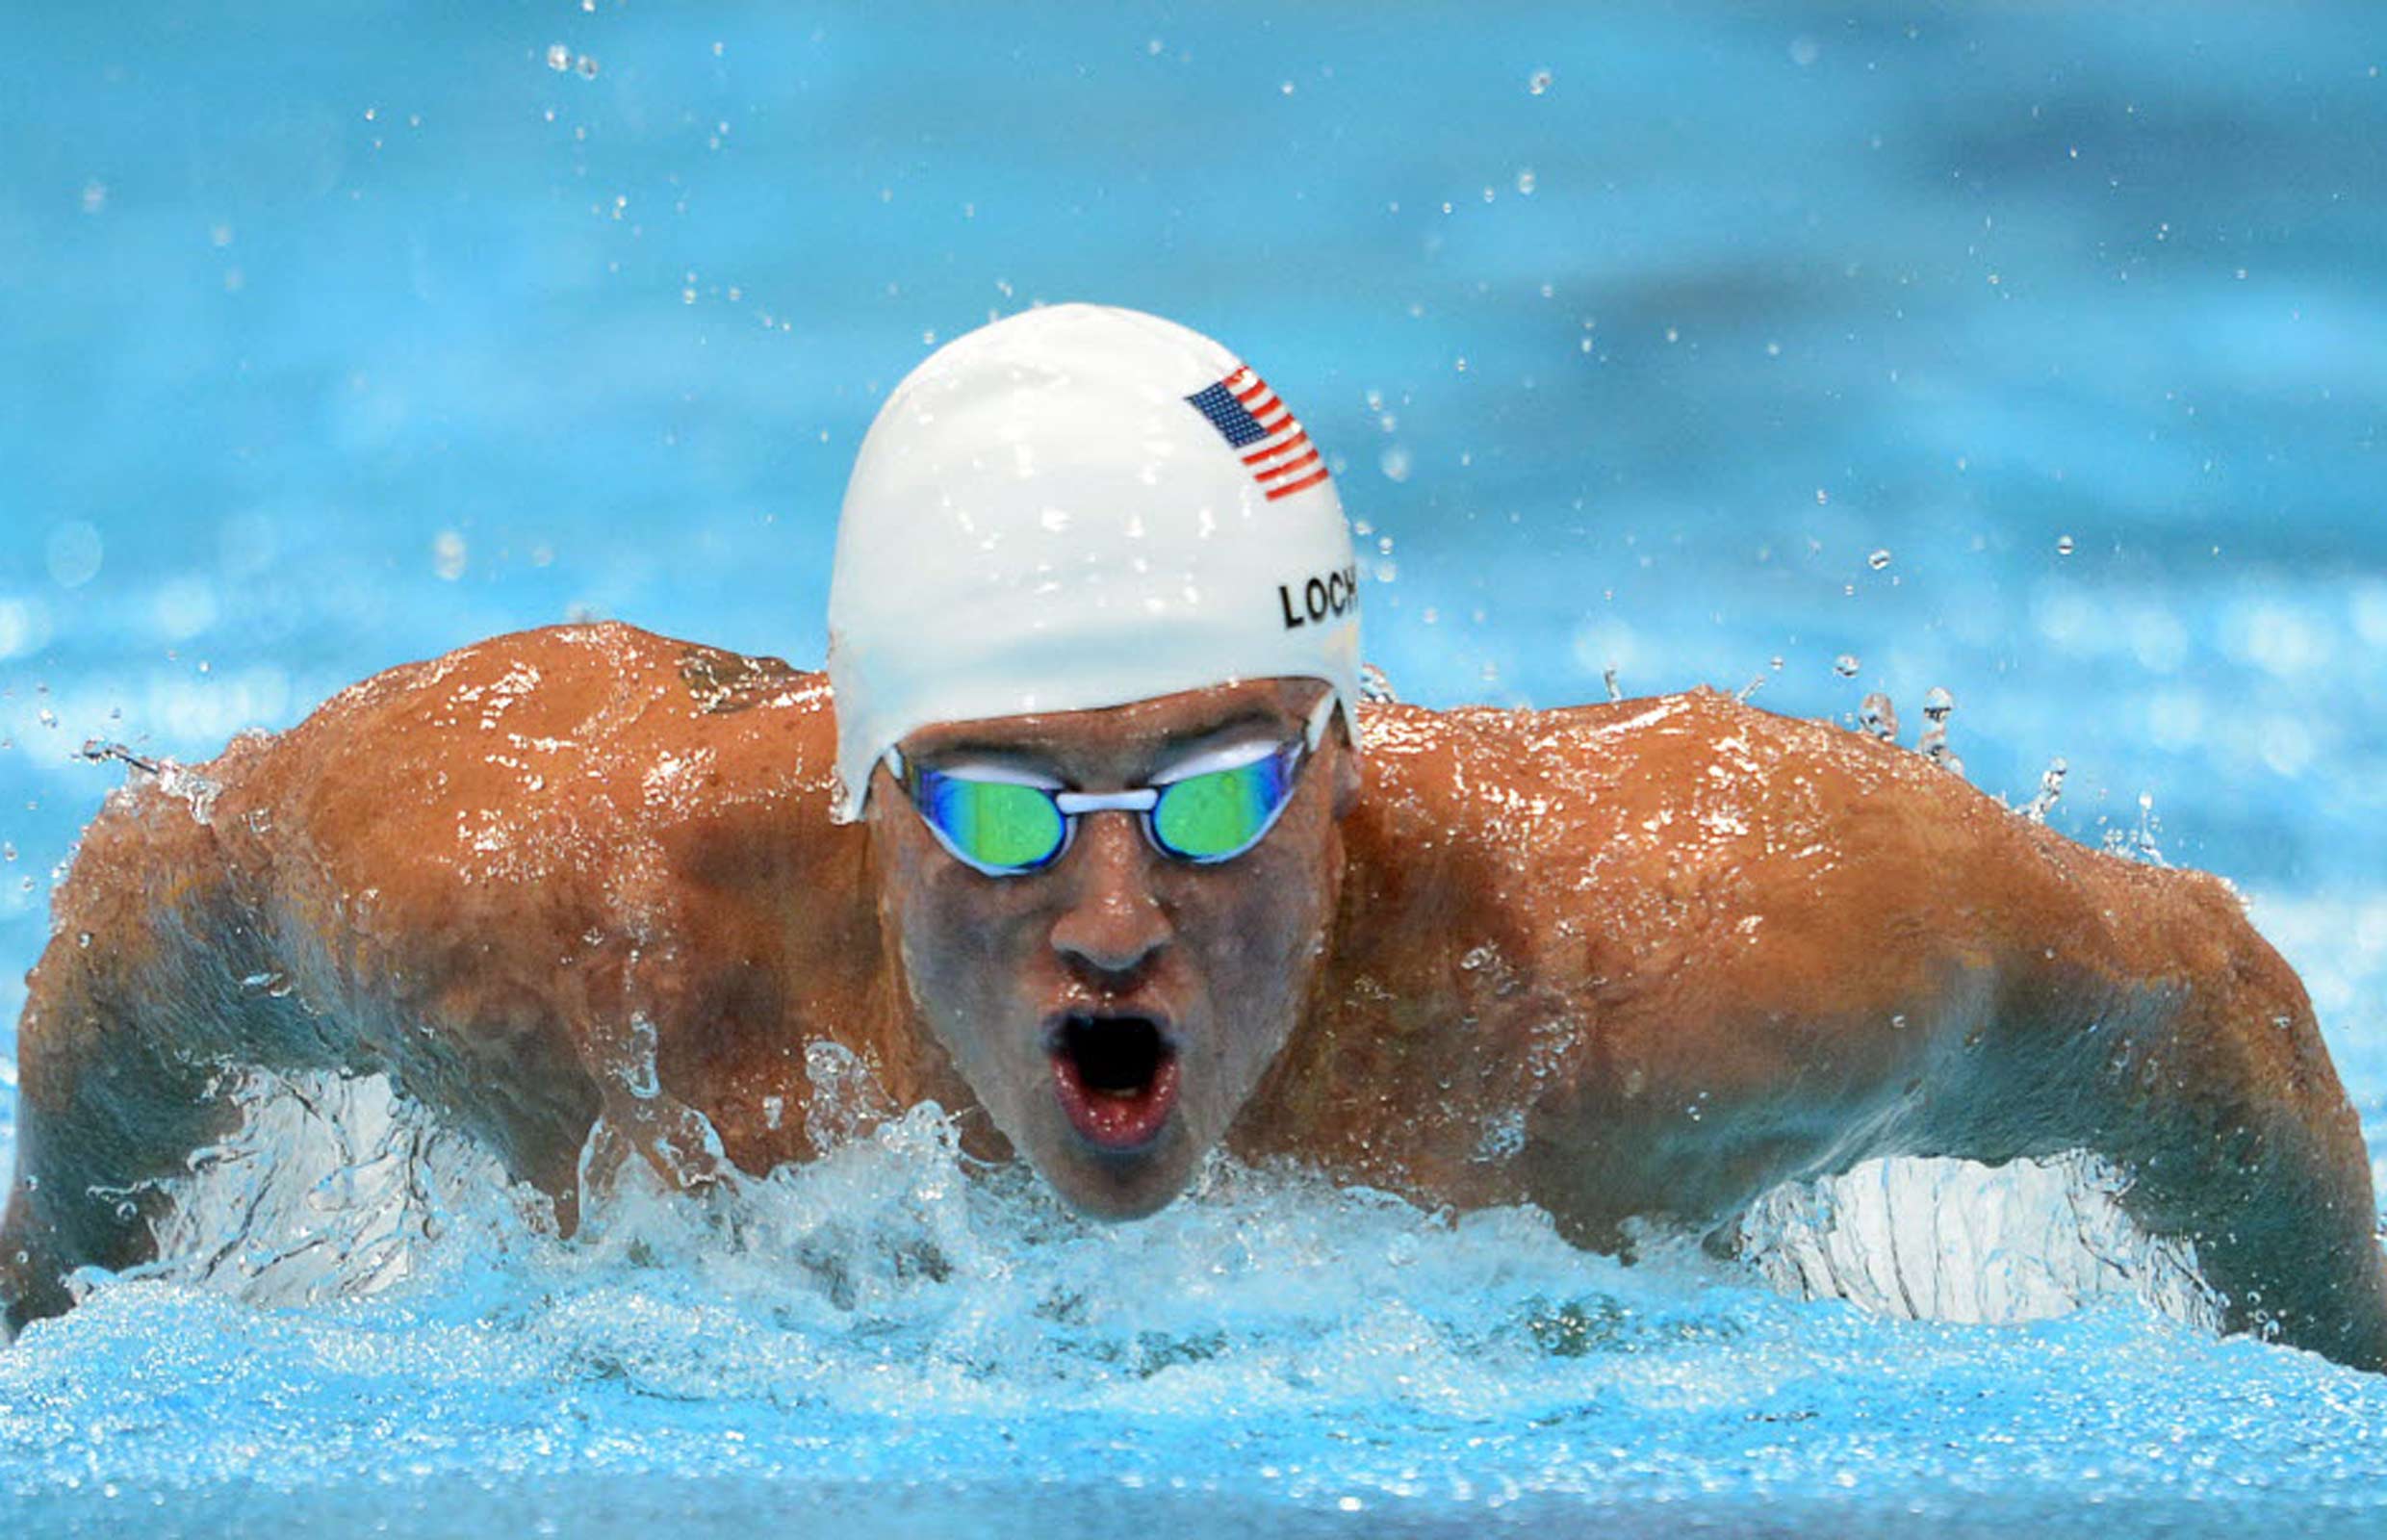 Ryan Locht, London Olympics 2012, Swimming | HD Wallpapers